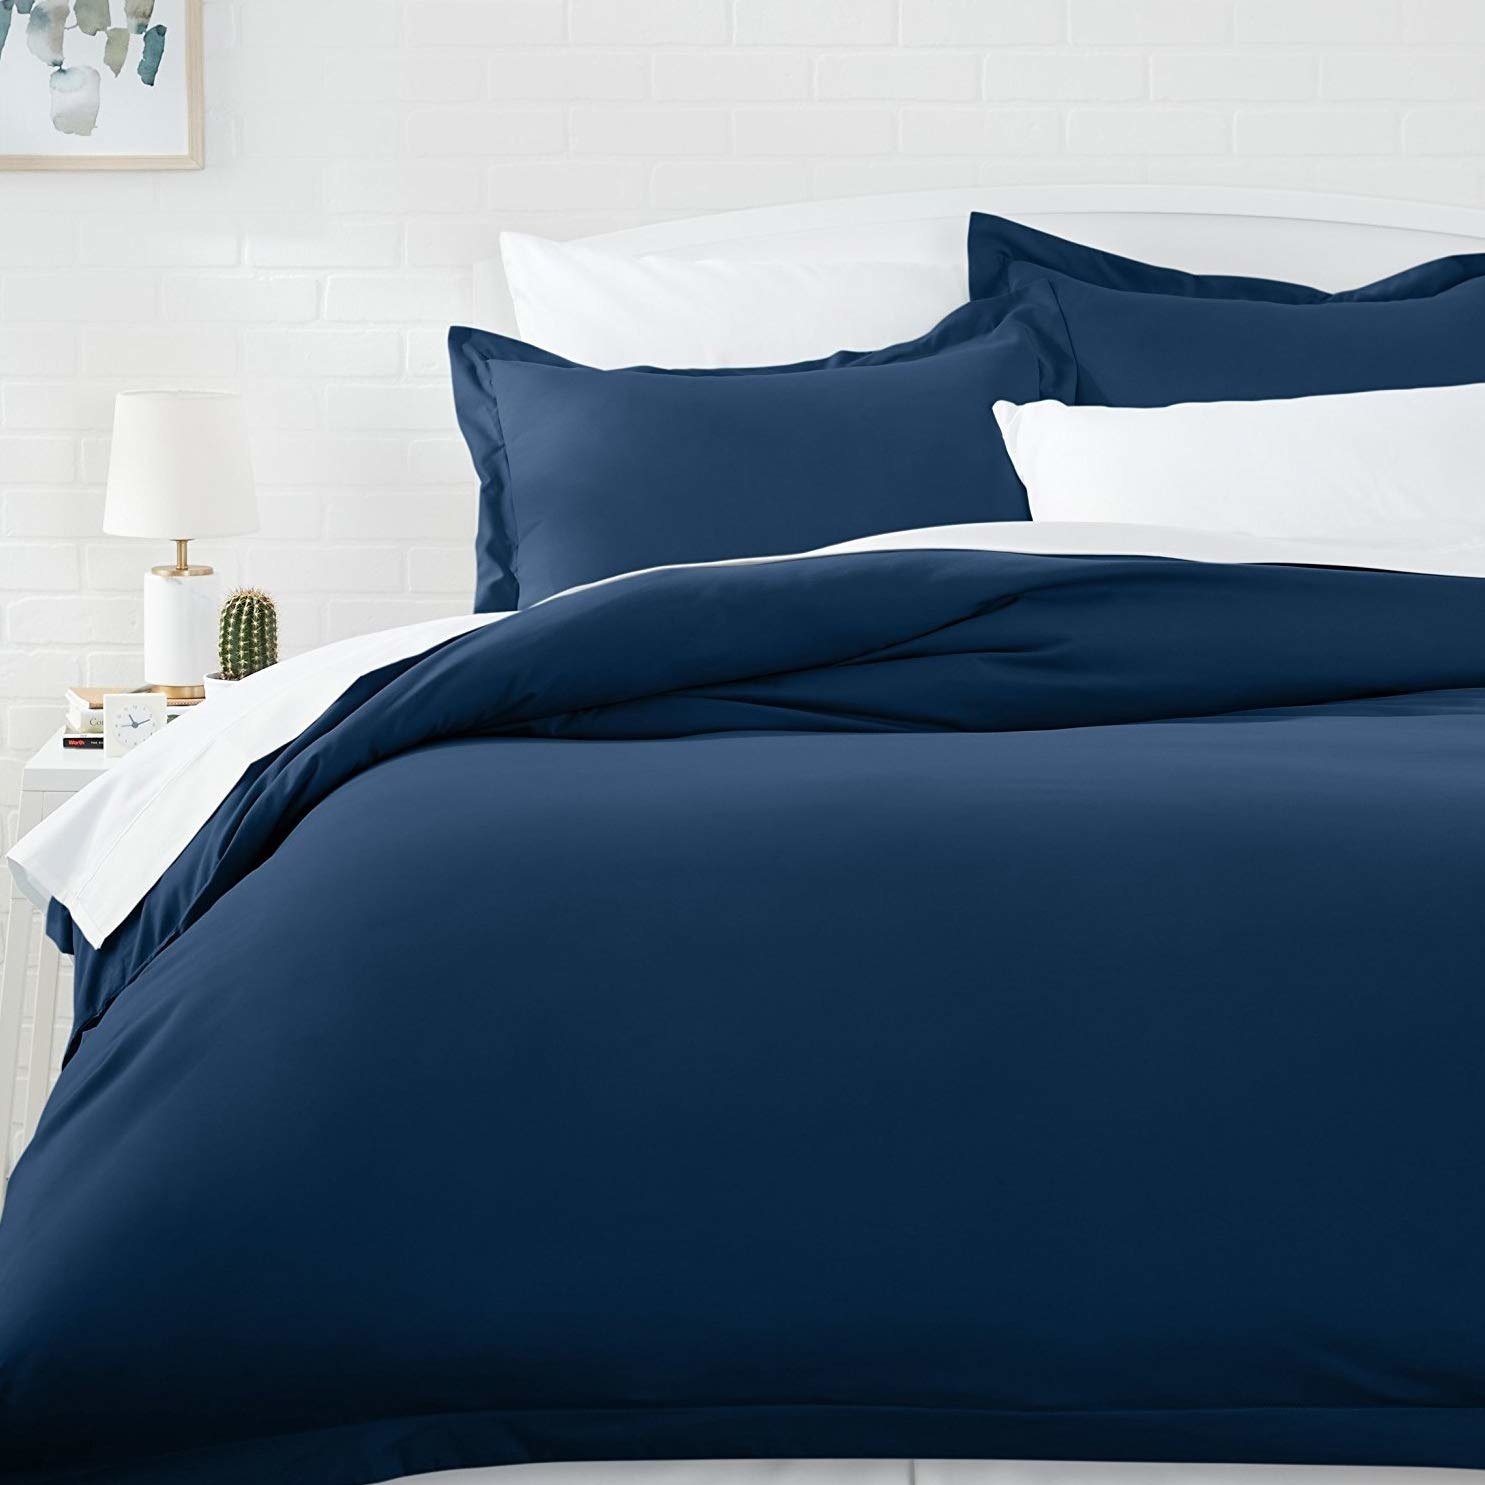 Navy blue microfiber duvet on a bed